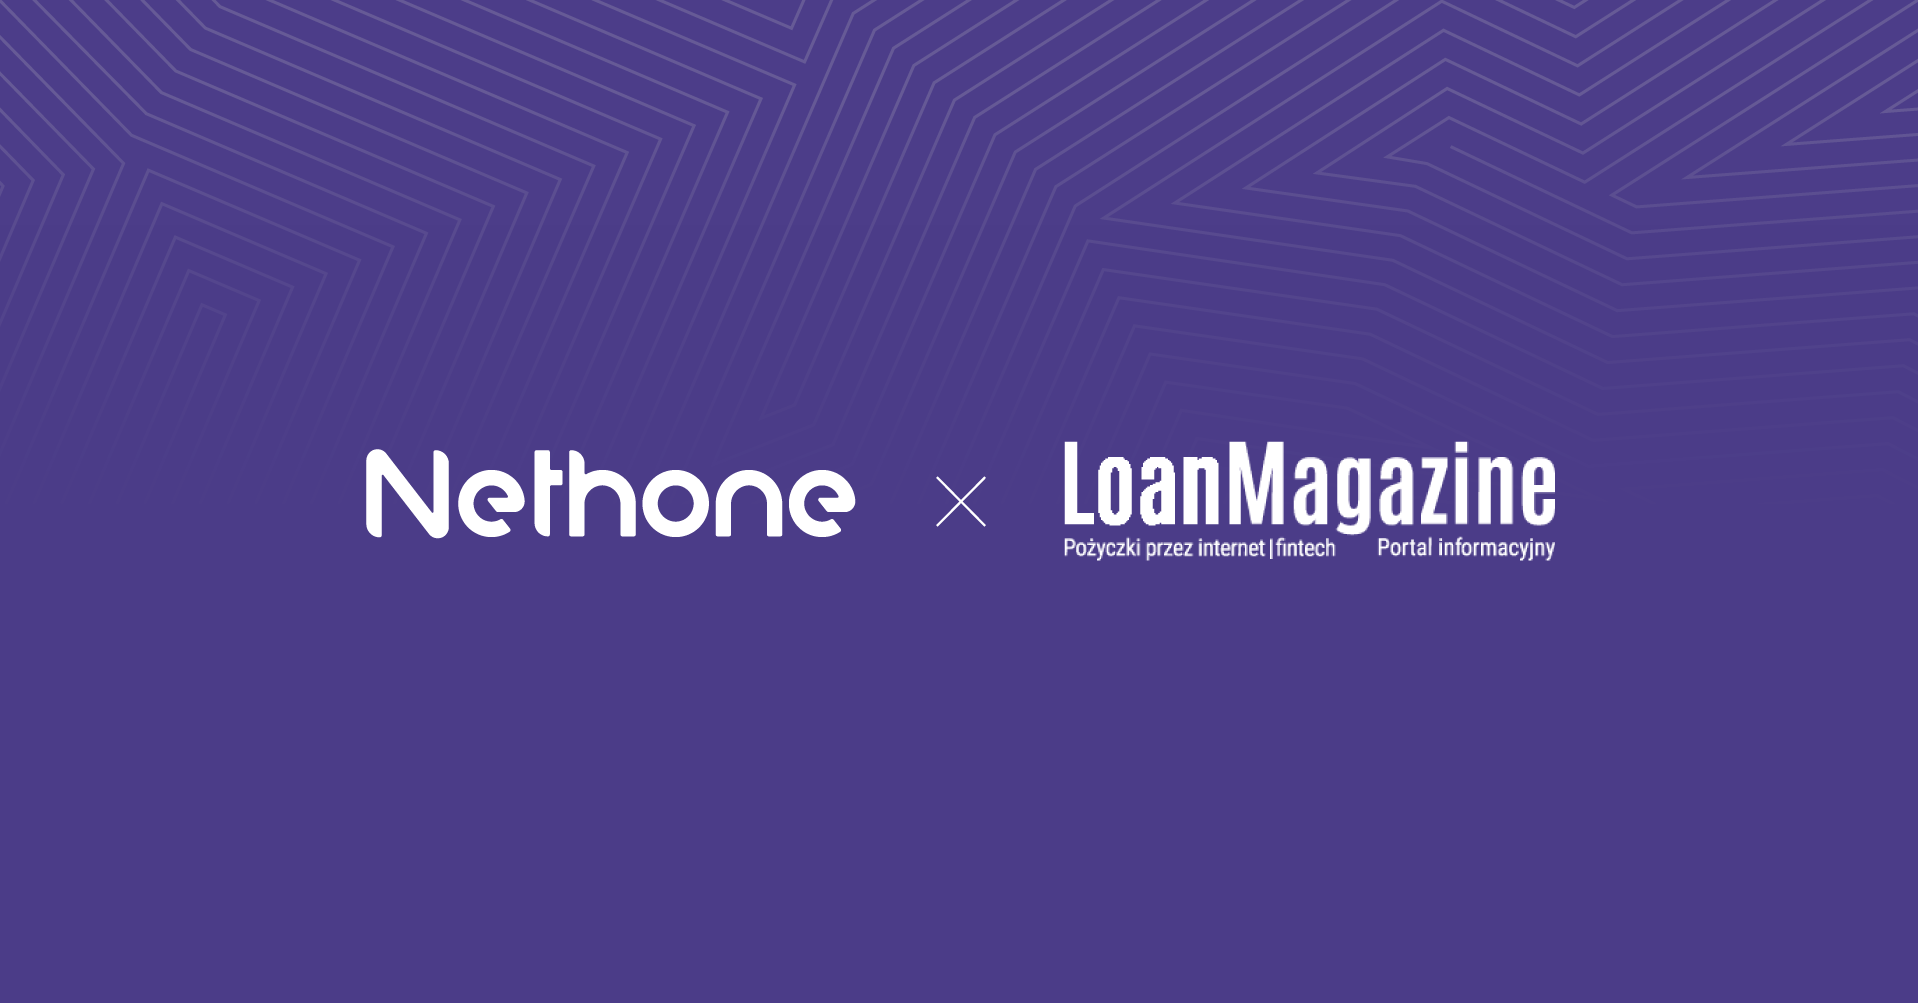 Nethone x LoanMagazine